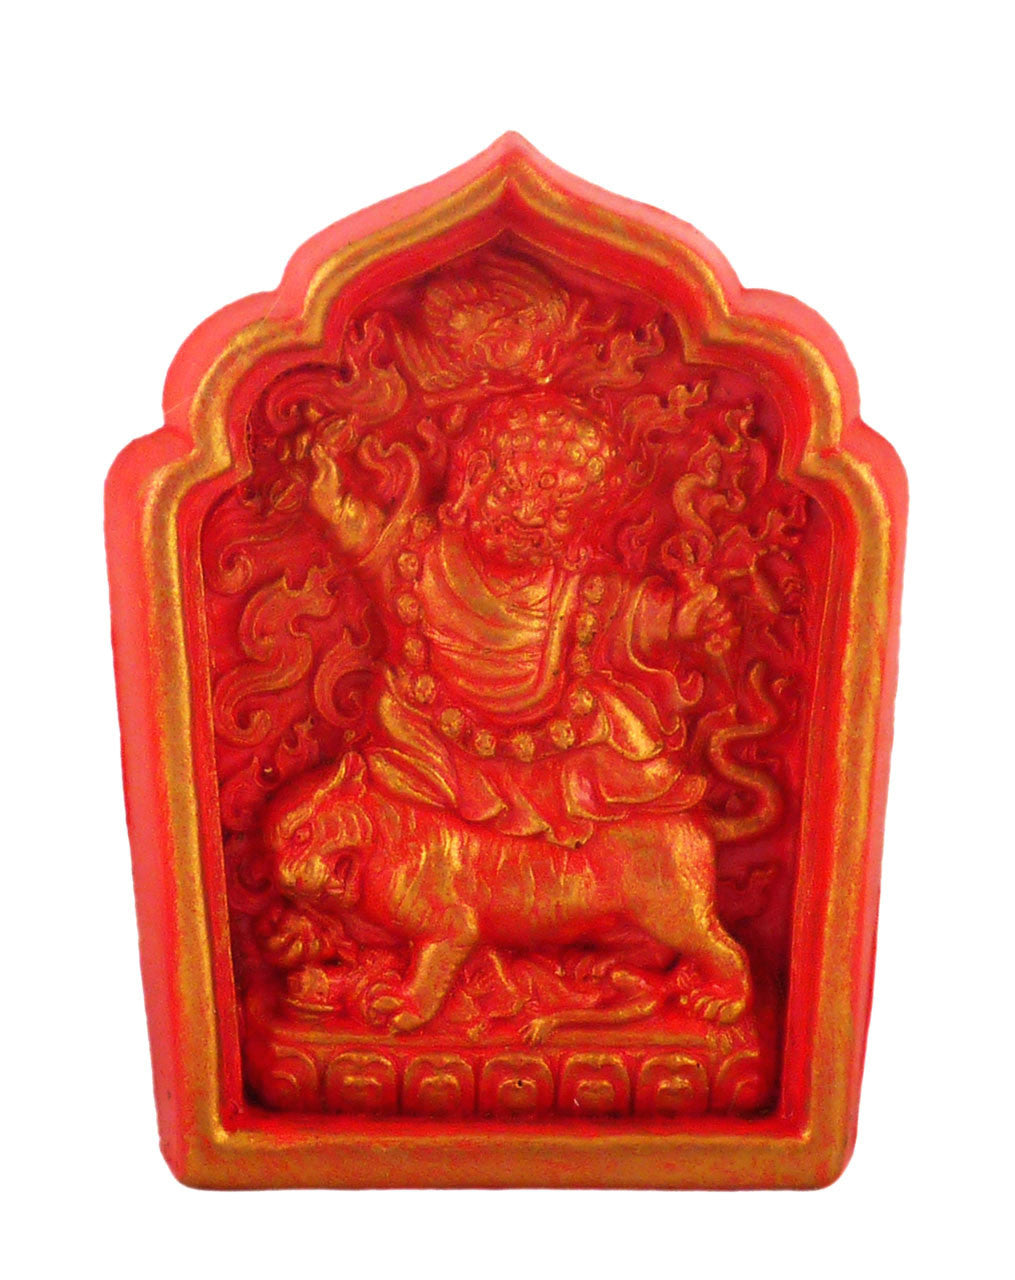 Dorje Drolod Tsa Tsa (Fire Red Golden Painted)